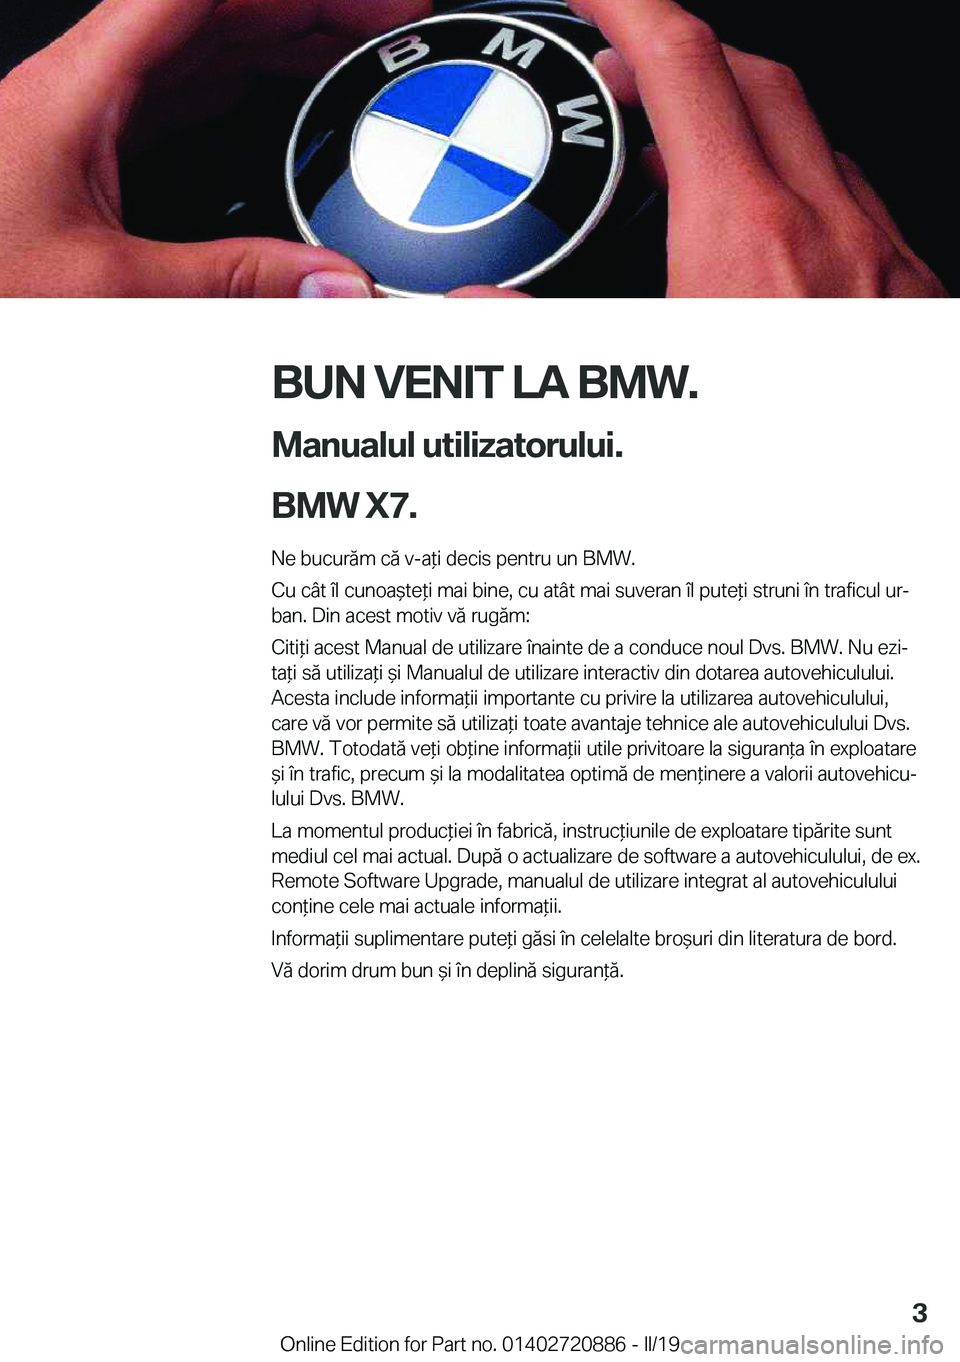 BMW X7 2019  Ghiduri De Utilizare (in Romanian) �B�U�N��V�E�N�I�T��L�A��B�M�W�.�M�a�n�u�a�l�u�l��u�t�i�l�i�z�a�t�o�r�u�l�u�i�.
�B�M�W��X�7�. �N�e��b�u�c�u�r�